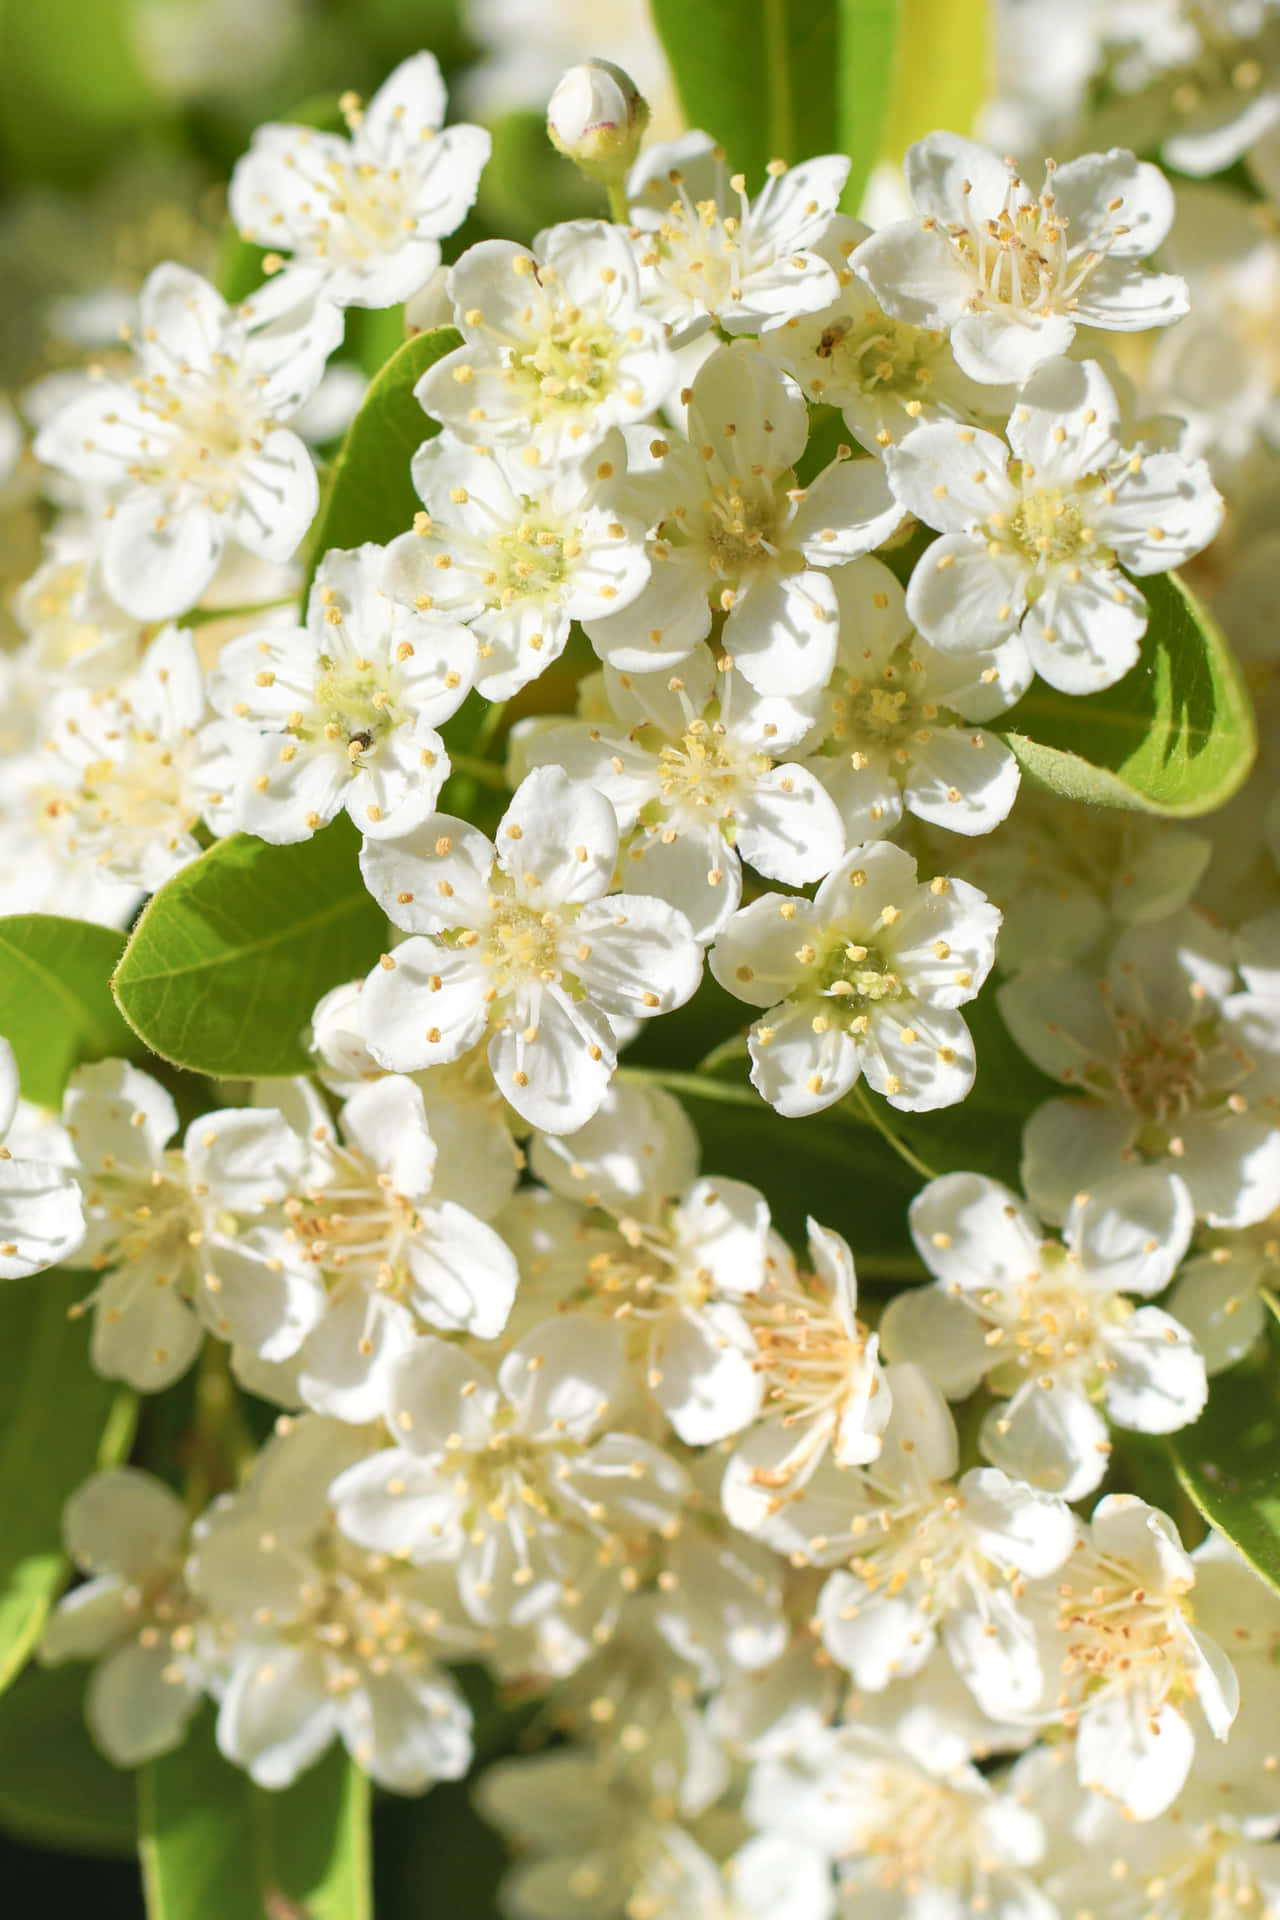 "Beautiful White Flowers in a Garden"